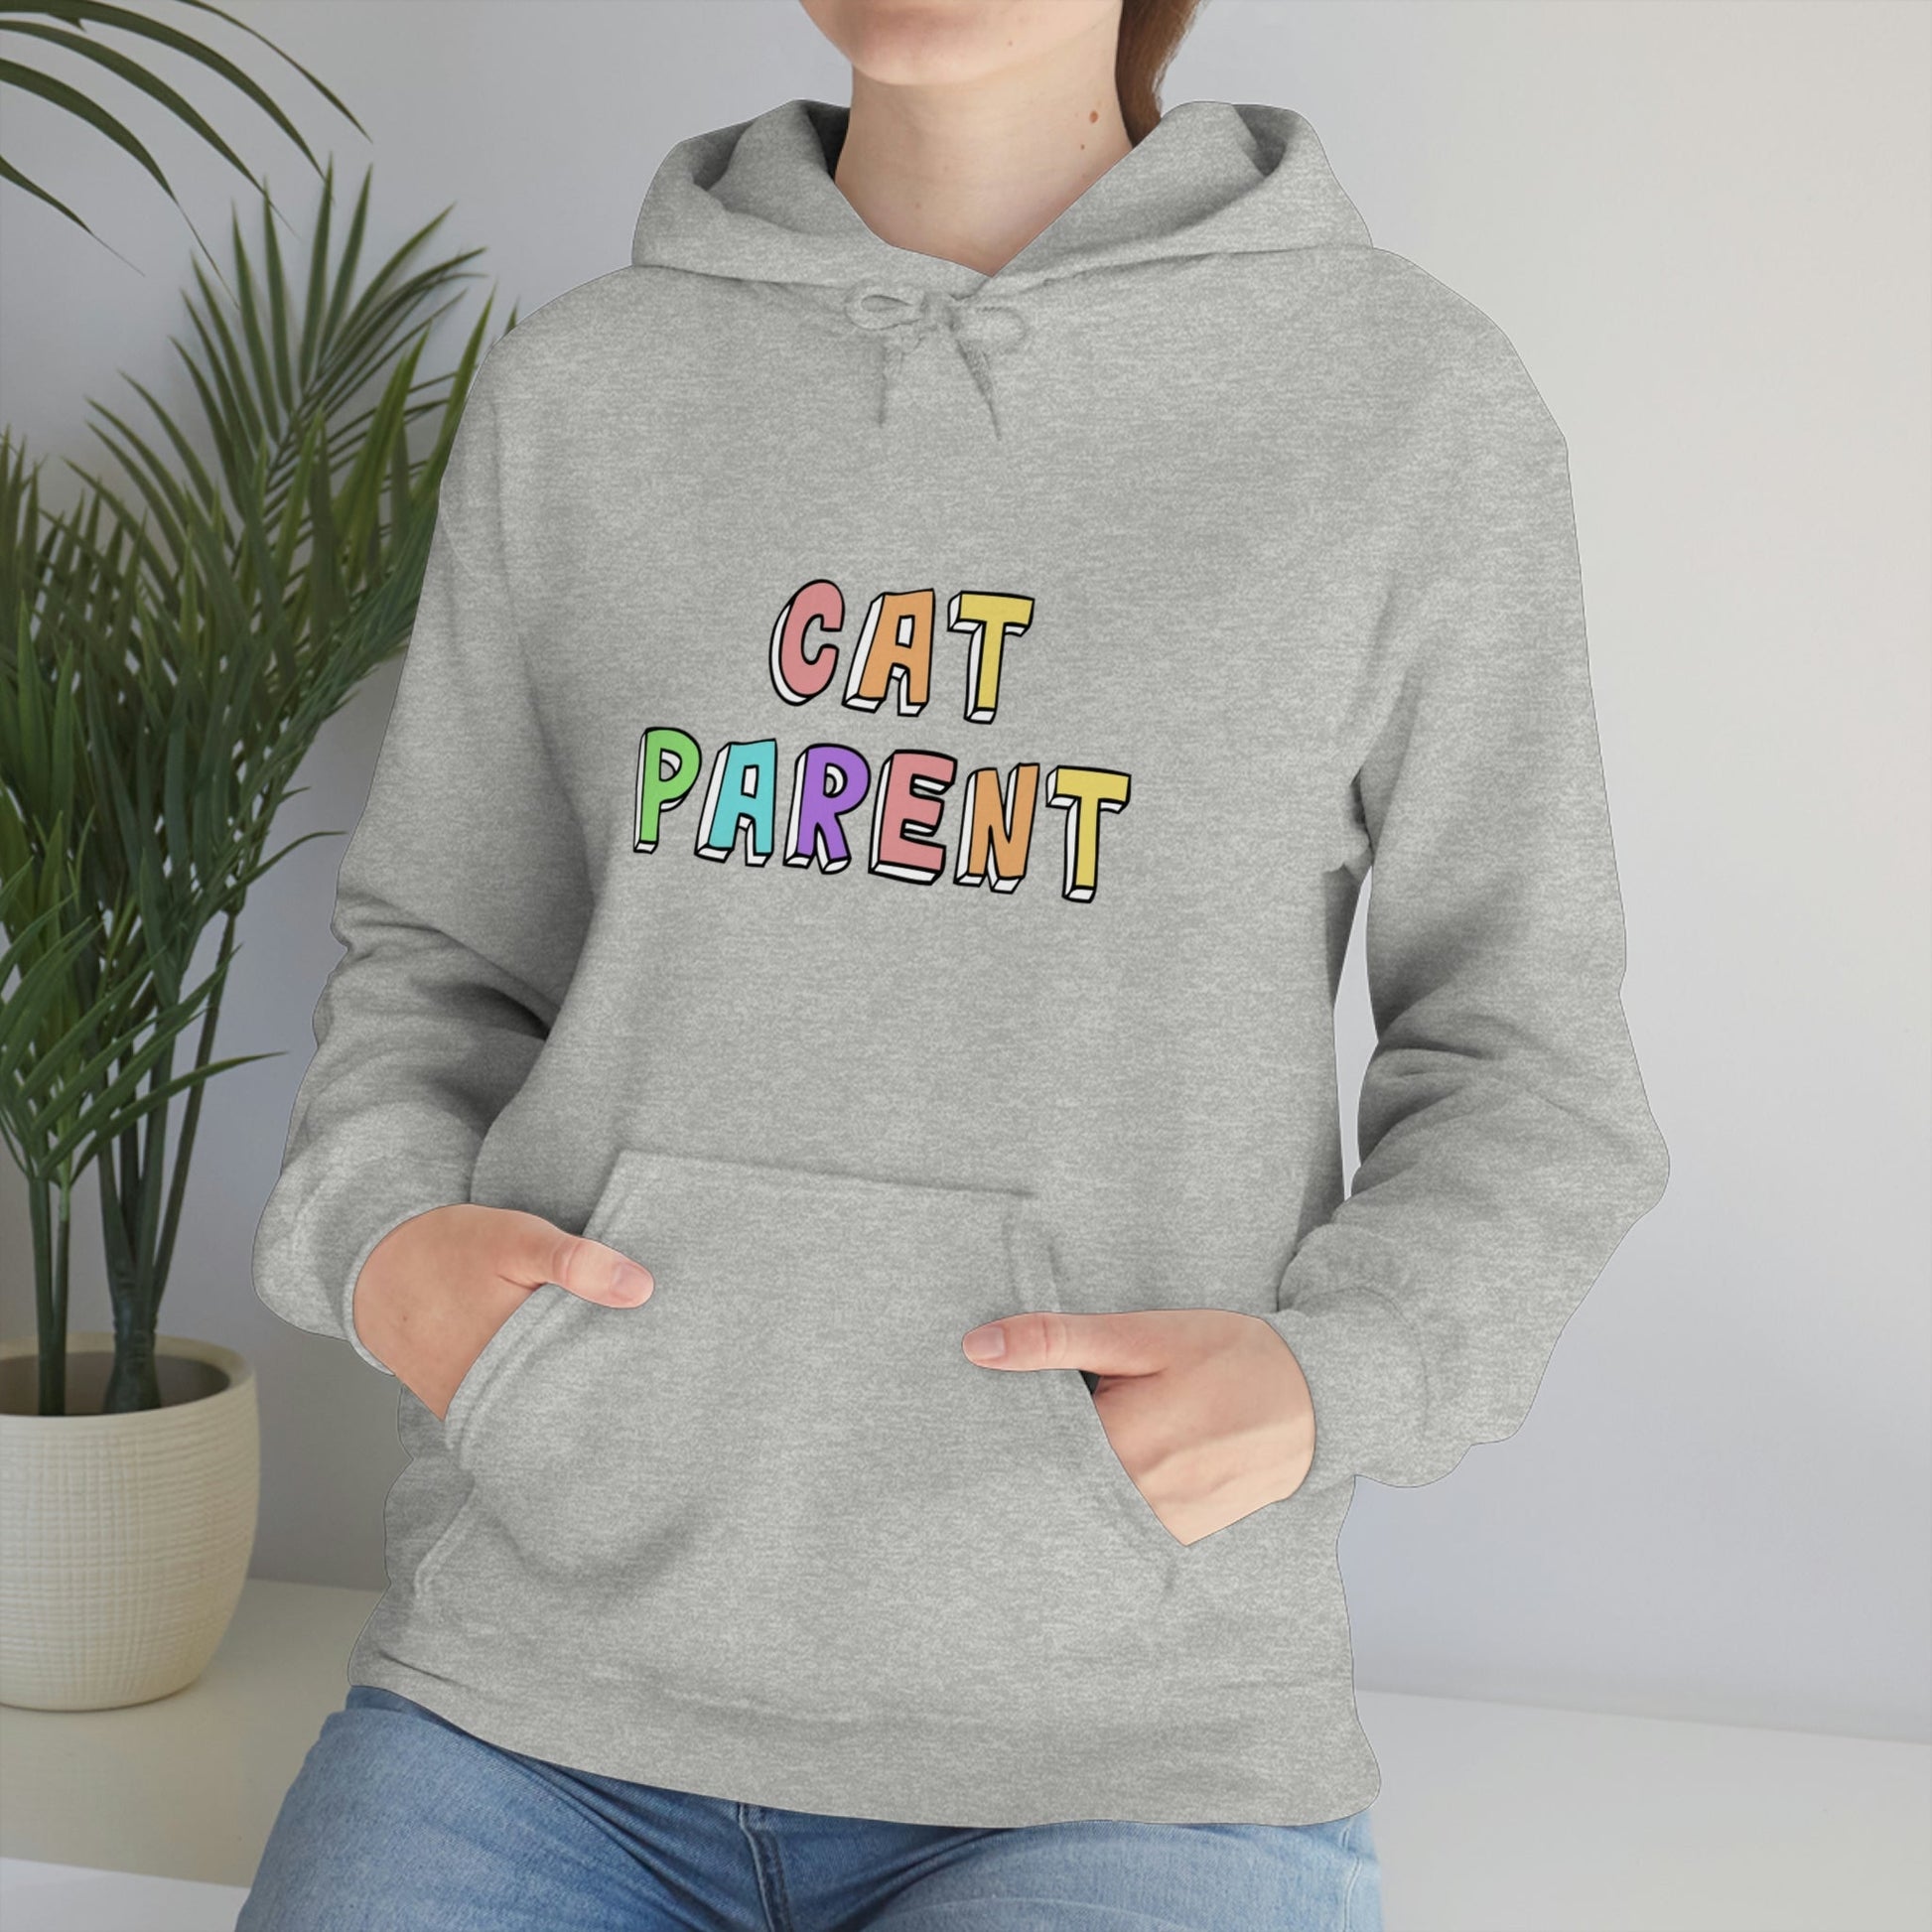 Cat Parent | Hooded Sweatshirt - Detezi Designs-18568789919215945265